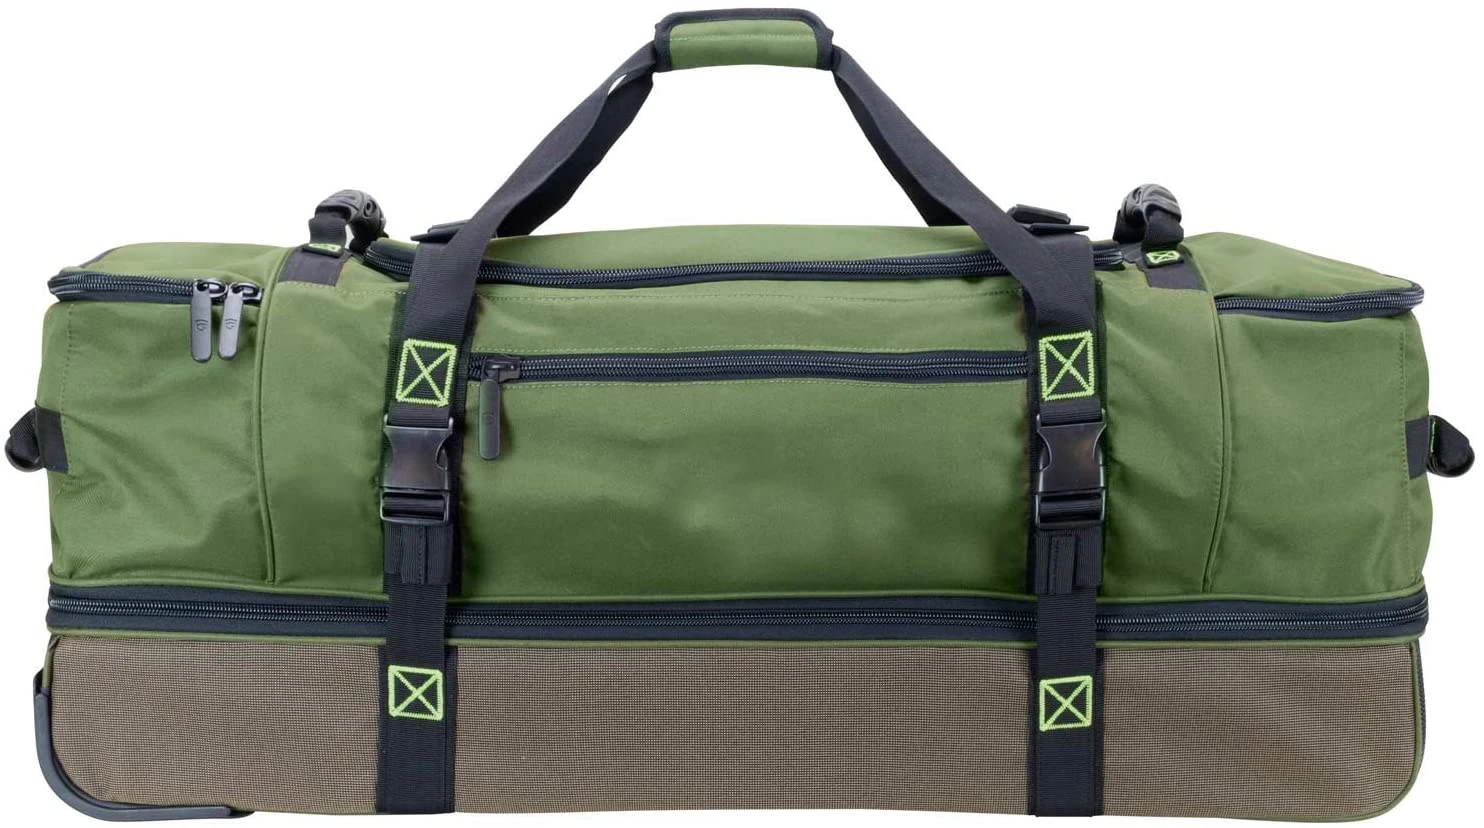 Outdoor oem custom fishing reels bags fashion luggage Design bolsa de pesca Insulated waterproof bags